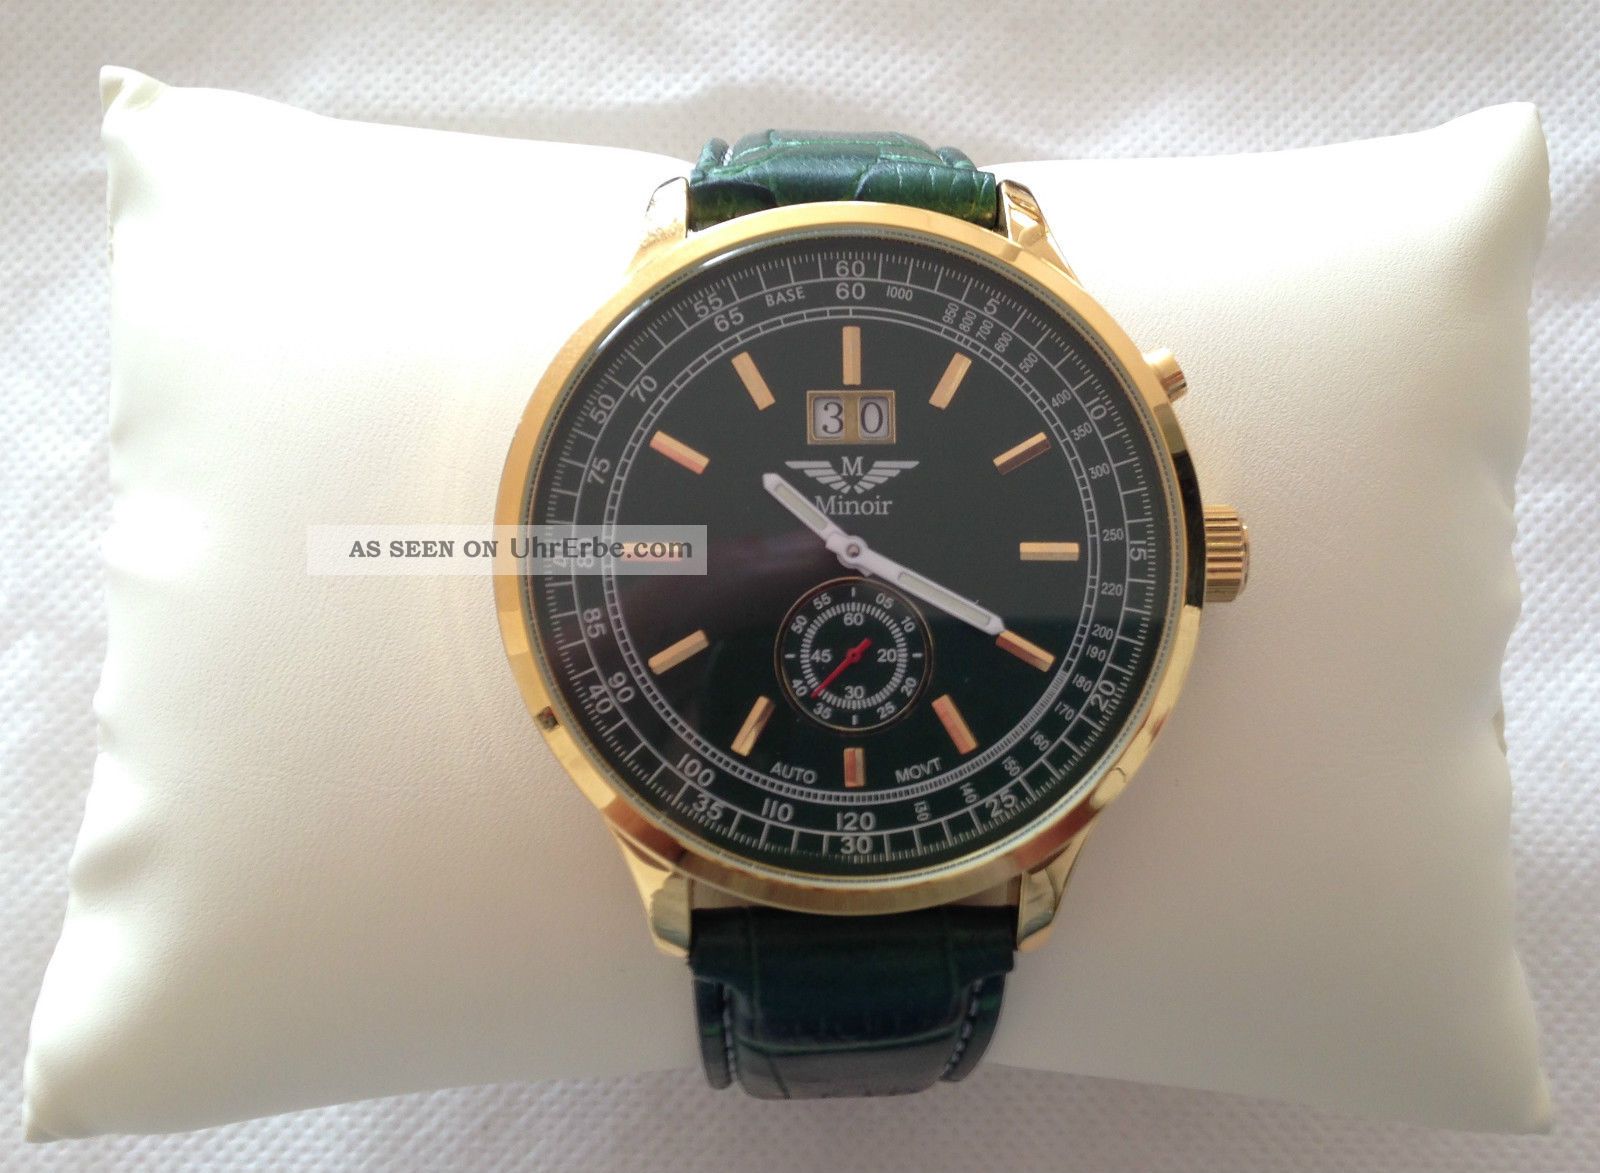 Armbanduhr Der Marke Minoir - Modell Diconne - Automatikwerk - Kleine Sekunde Armbanduhren Bild